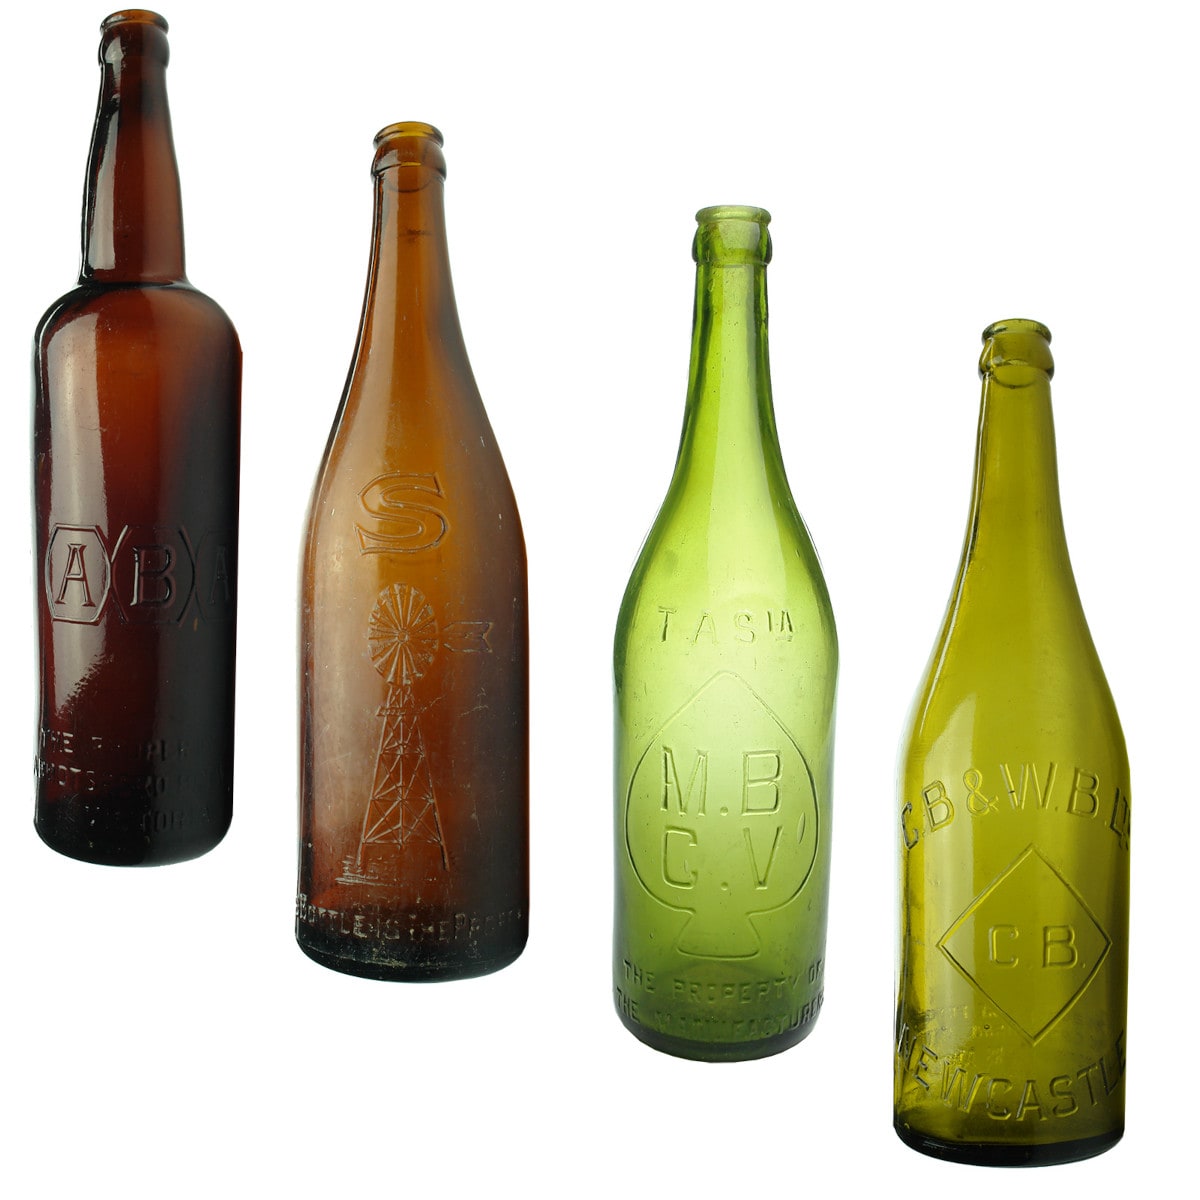 4 Crown Seal Beers: ABA Abbotsford; Settlers Club, Mildura; MBCV Tasia; CB & WB Newcastle.